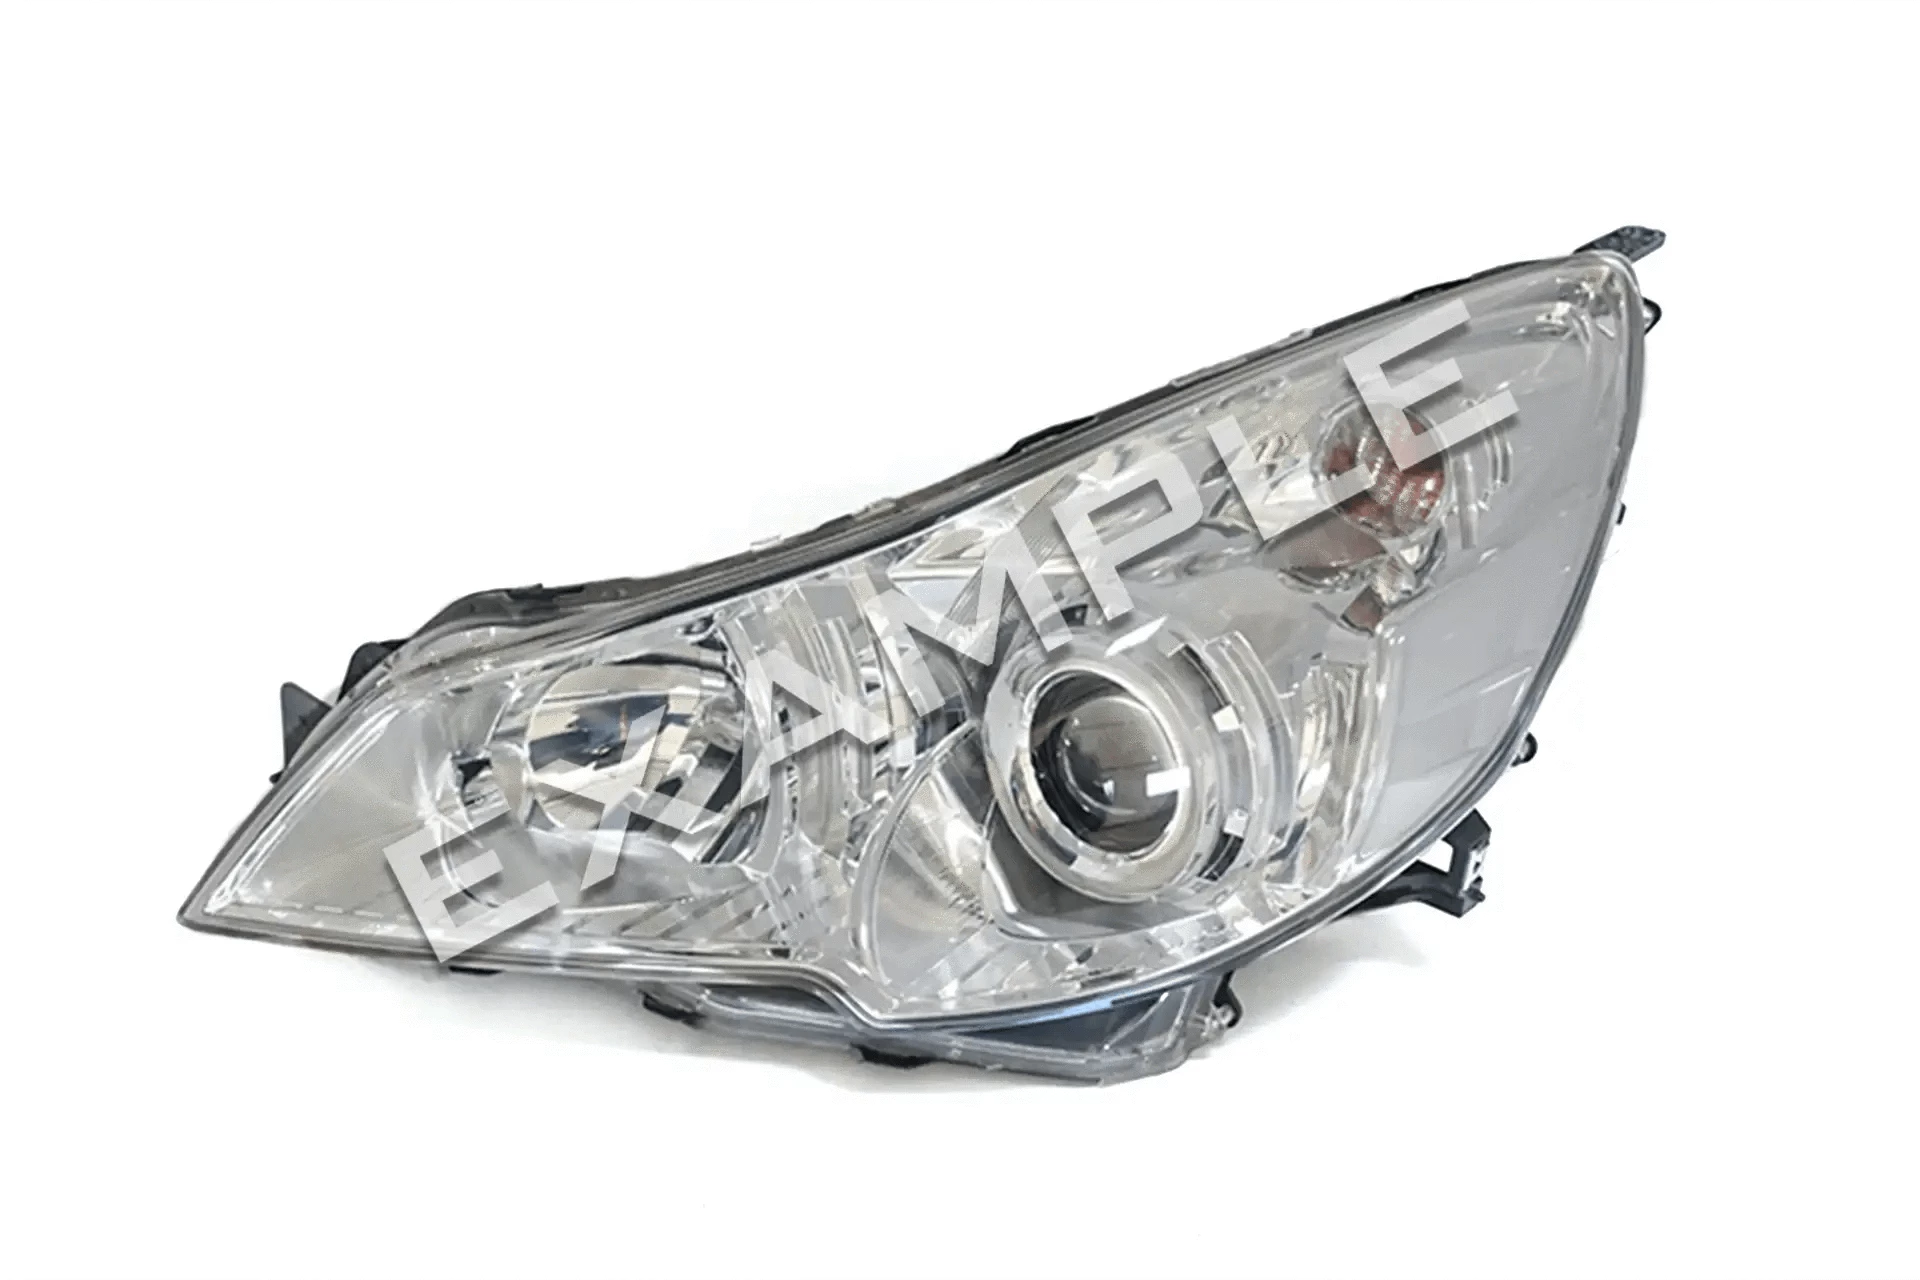 Subaru Legacy / Outback 09-14 bi-xenon koplamp reparatie & upgrade kit voor enkele xenon koplampen